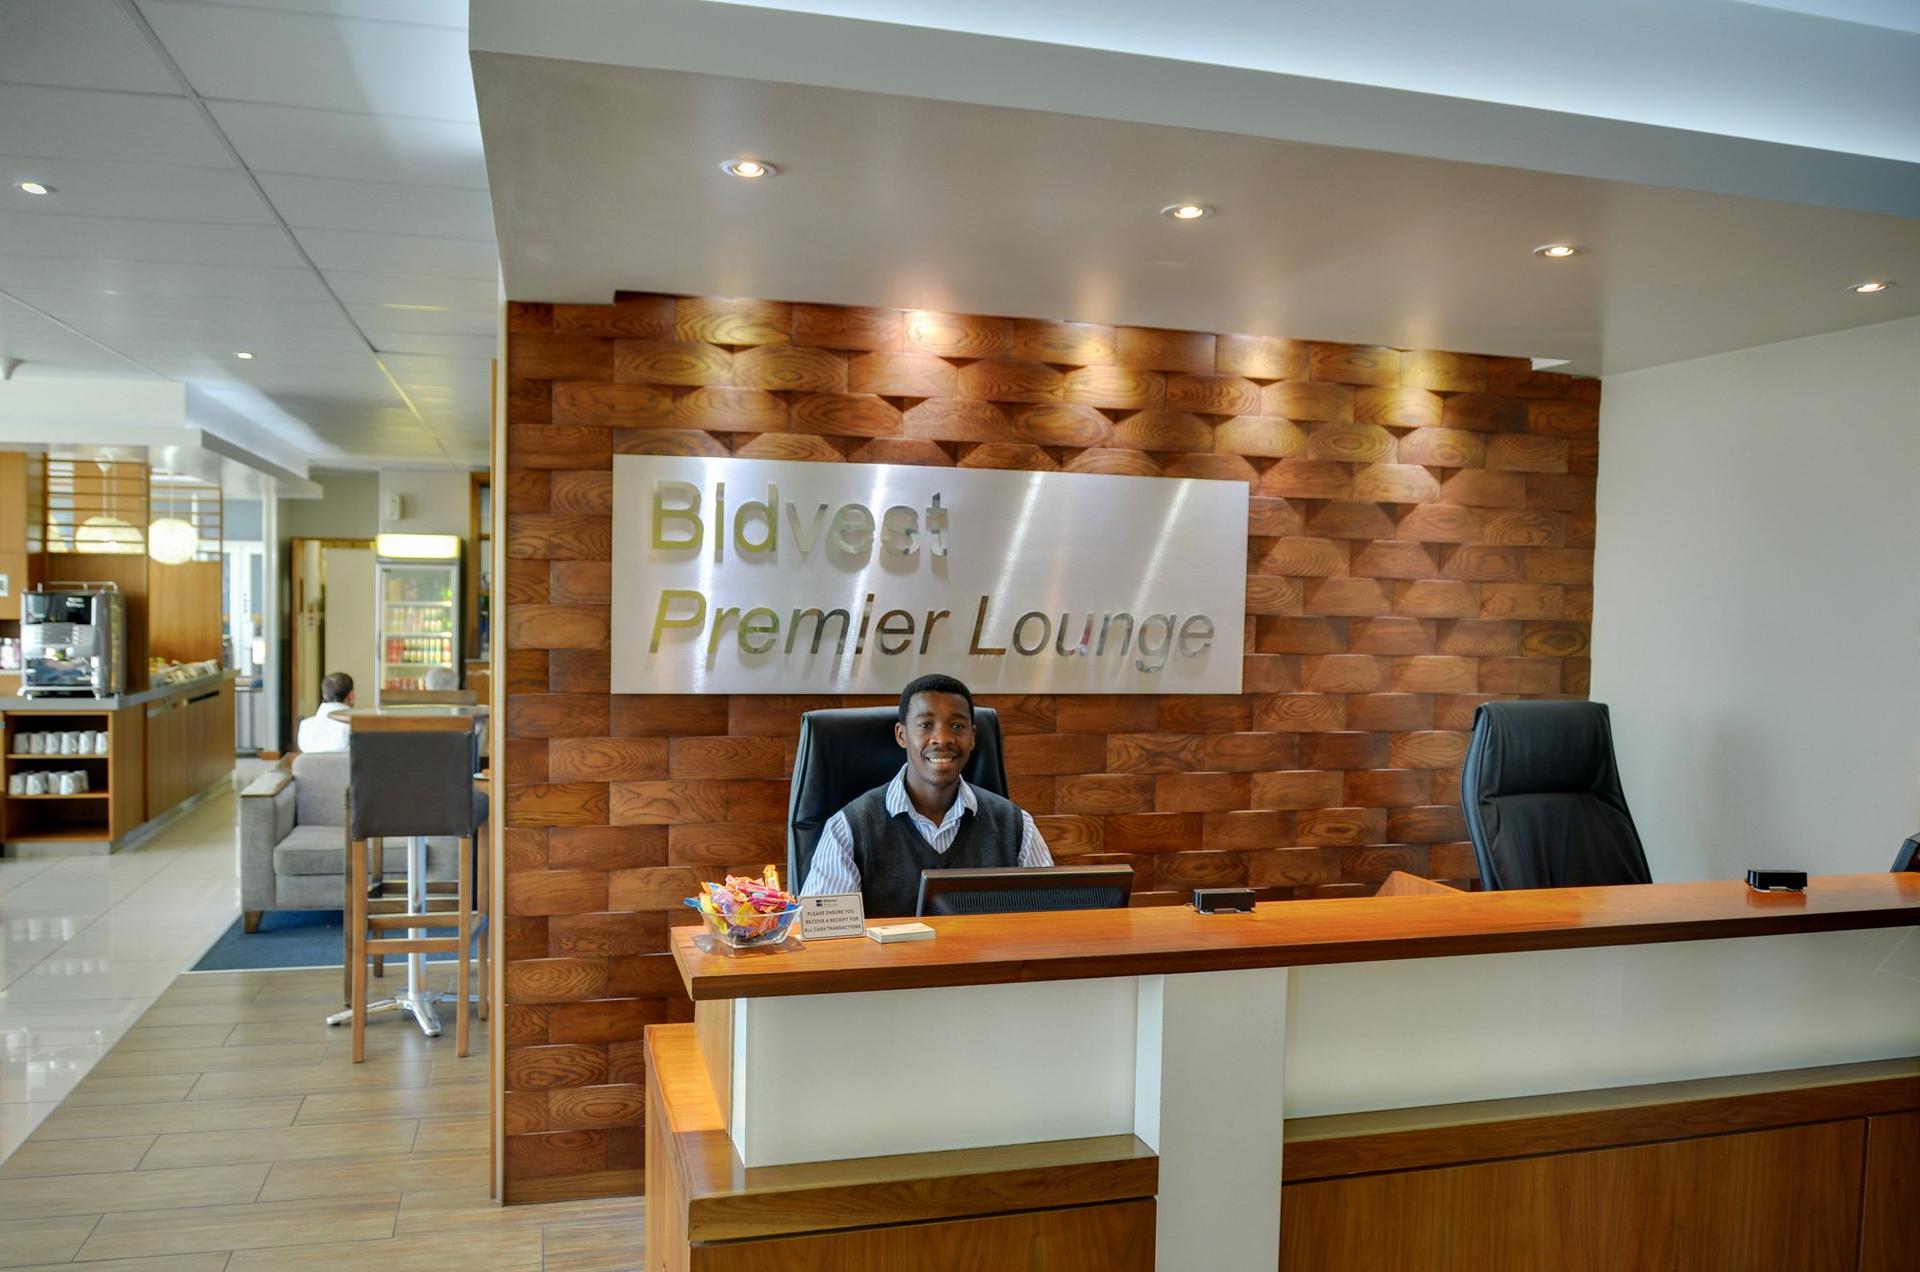 Bidvest Premier Lounge image 7 of 15